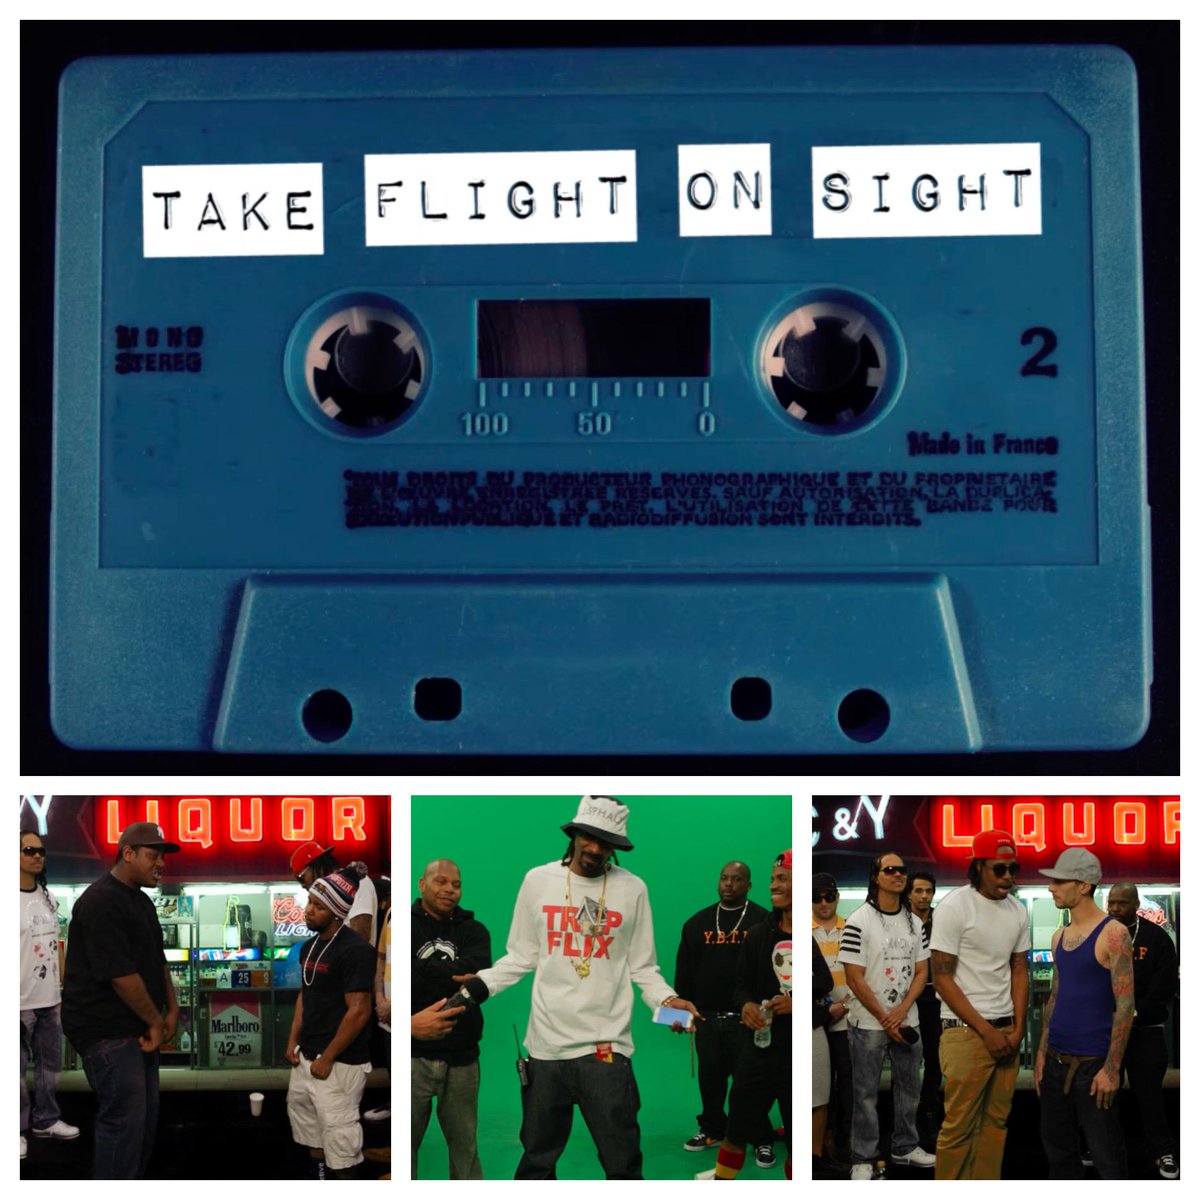 watch Snoop Dogg presents #TakeFlightOnsight rap battles episodes 1 n 2 up on #westfesttv !! http://t.co/tLTpZuBZ1A http://t.co/5jFqPyc2UZ